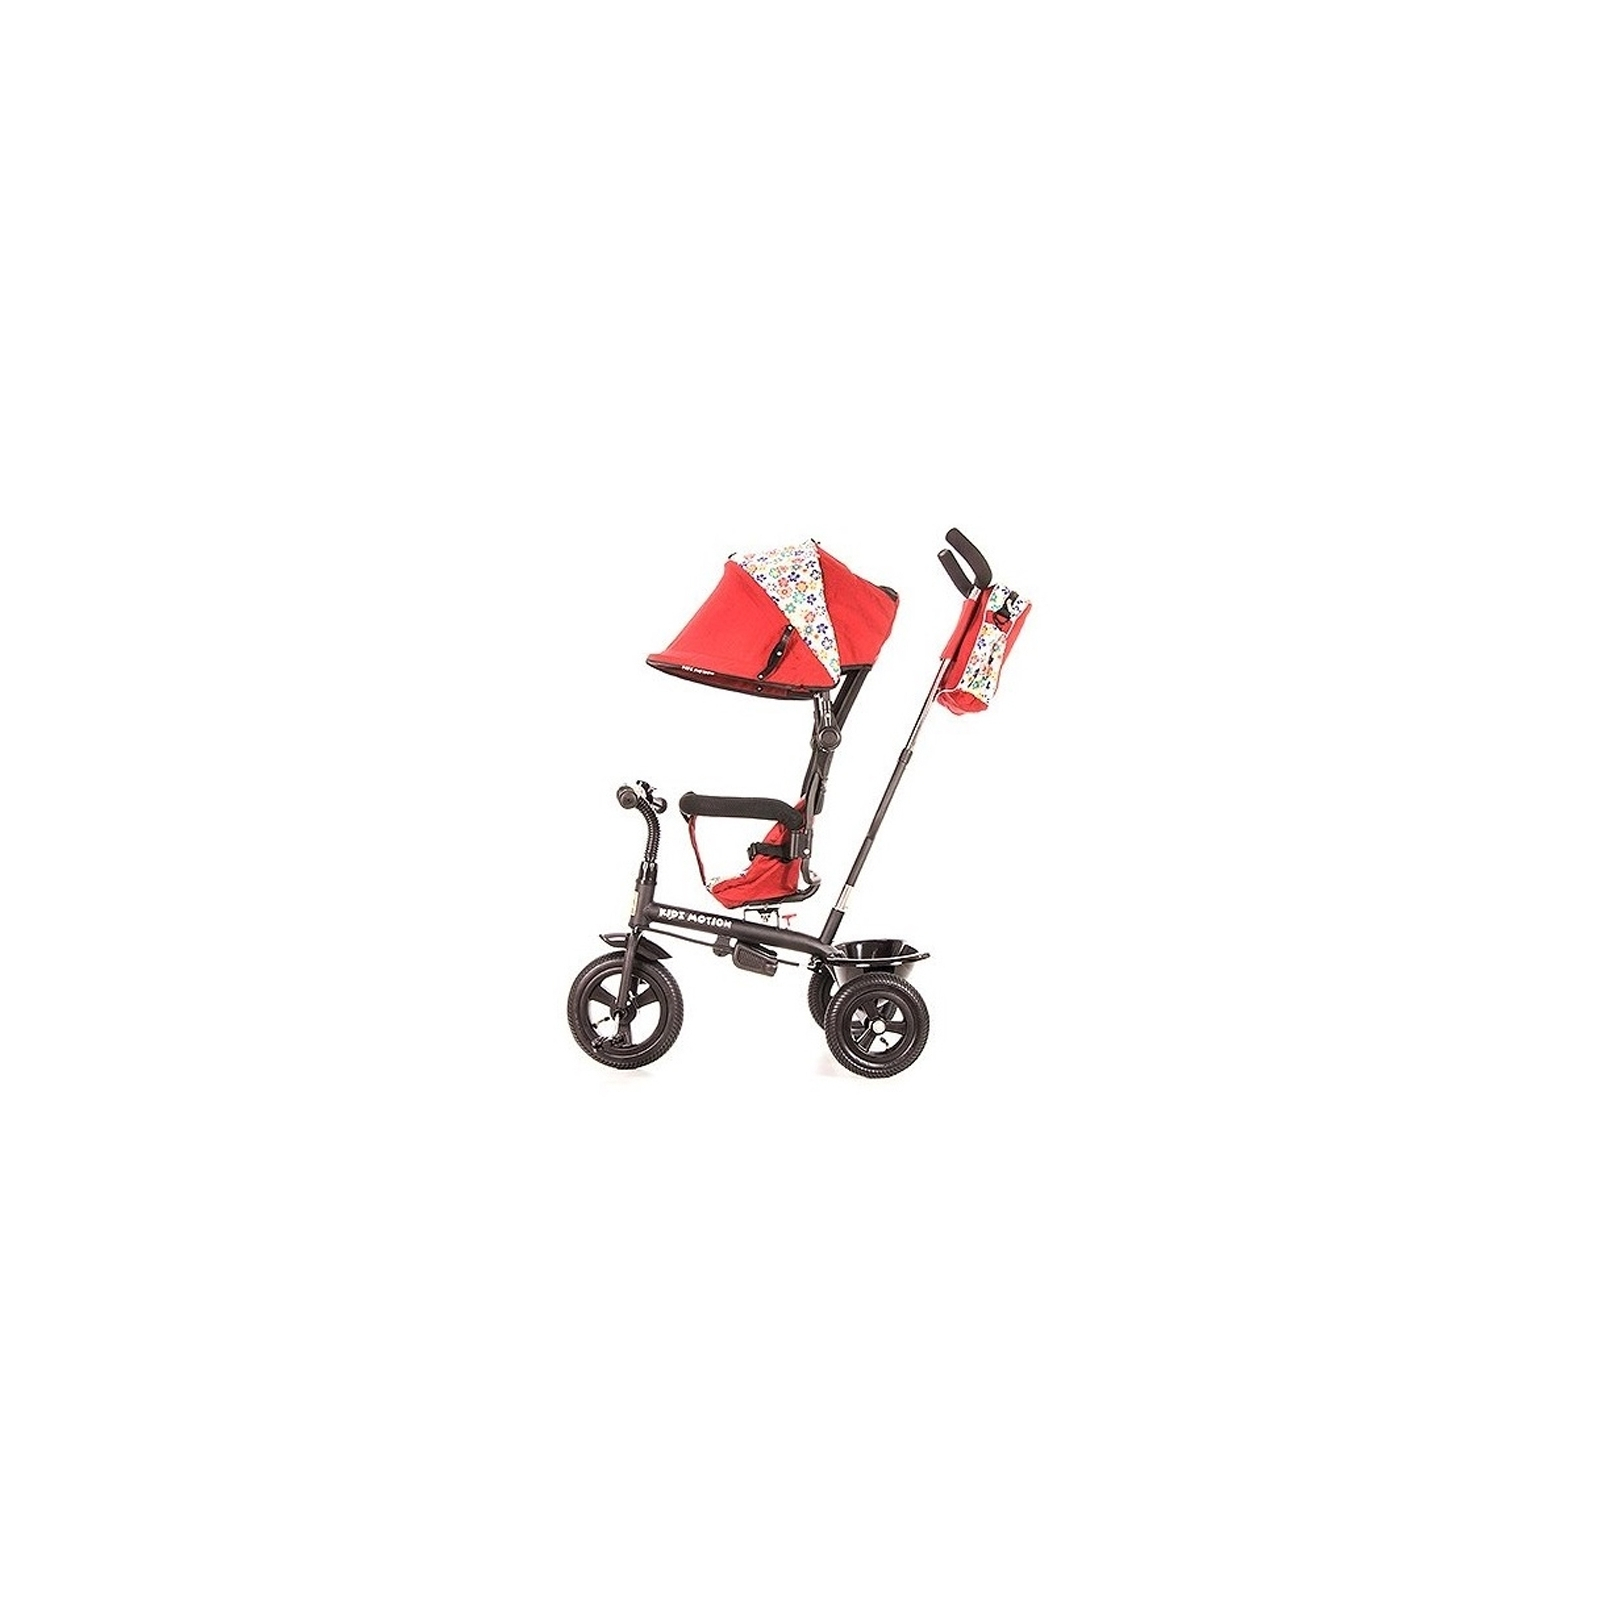 Дитячий велосипед KidzMotion Tobi Venture RED (115002/red) зображення 4